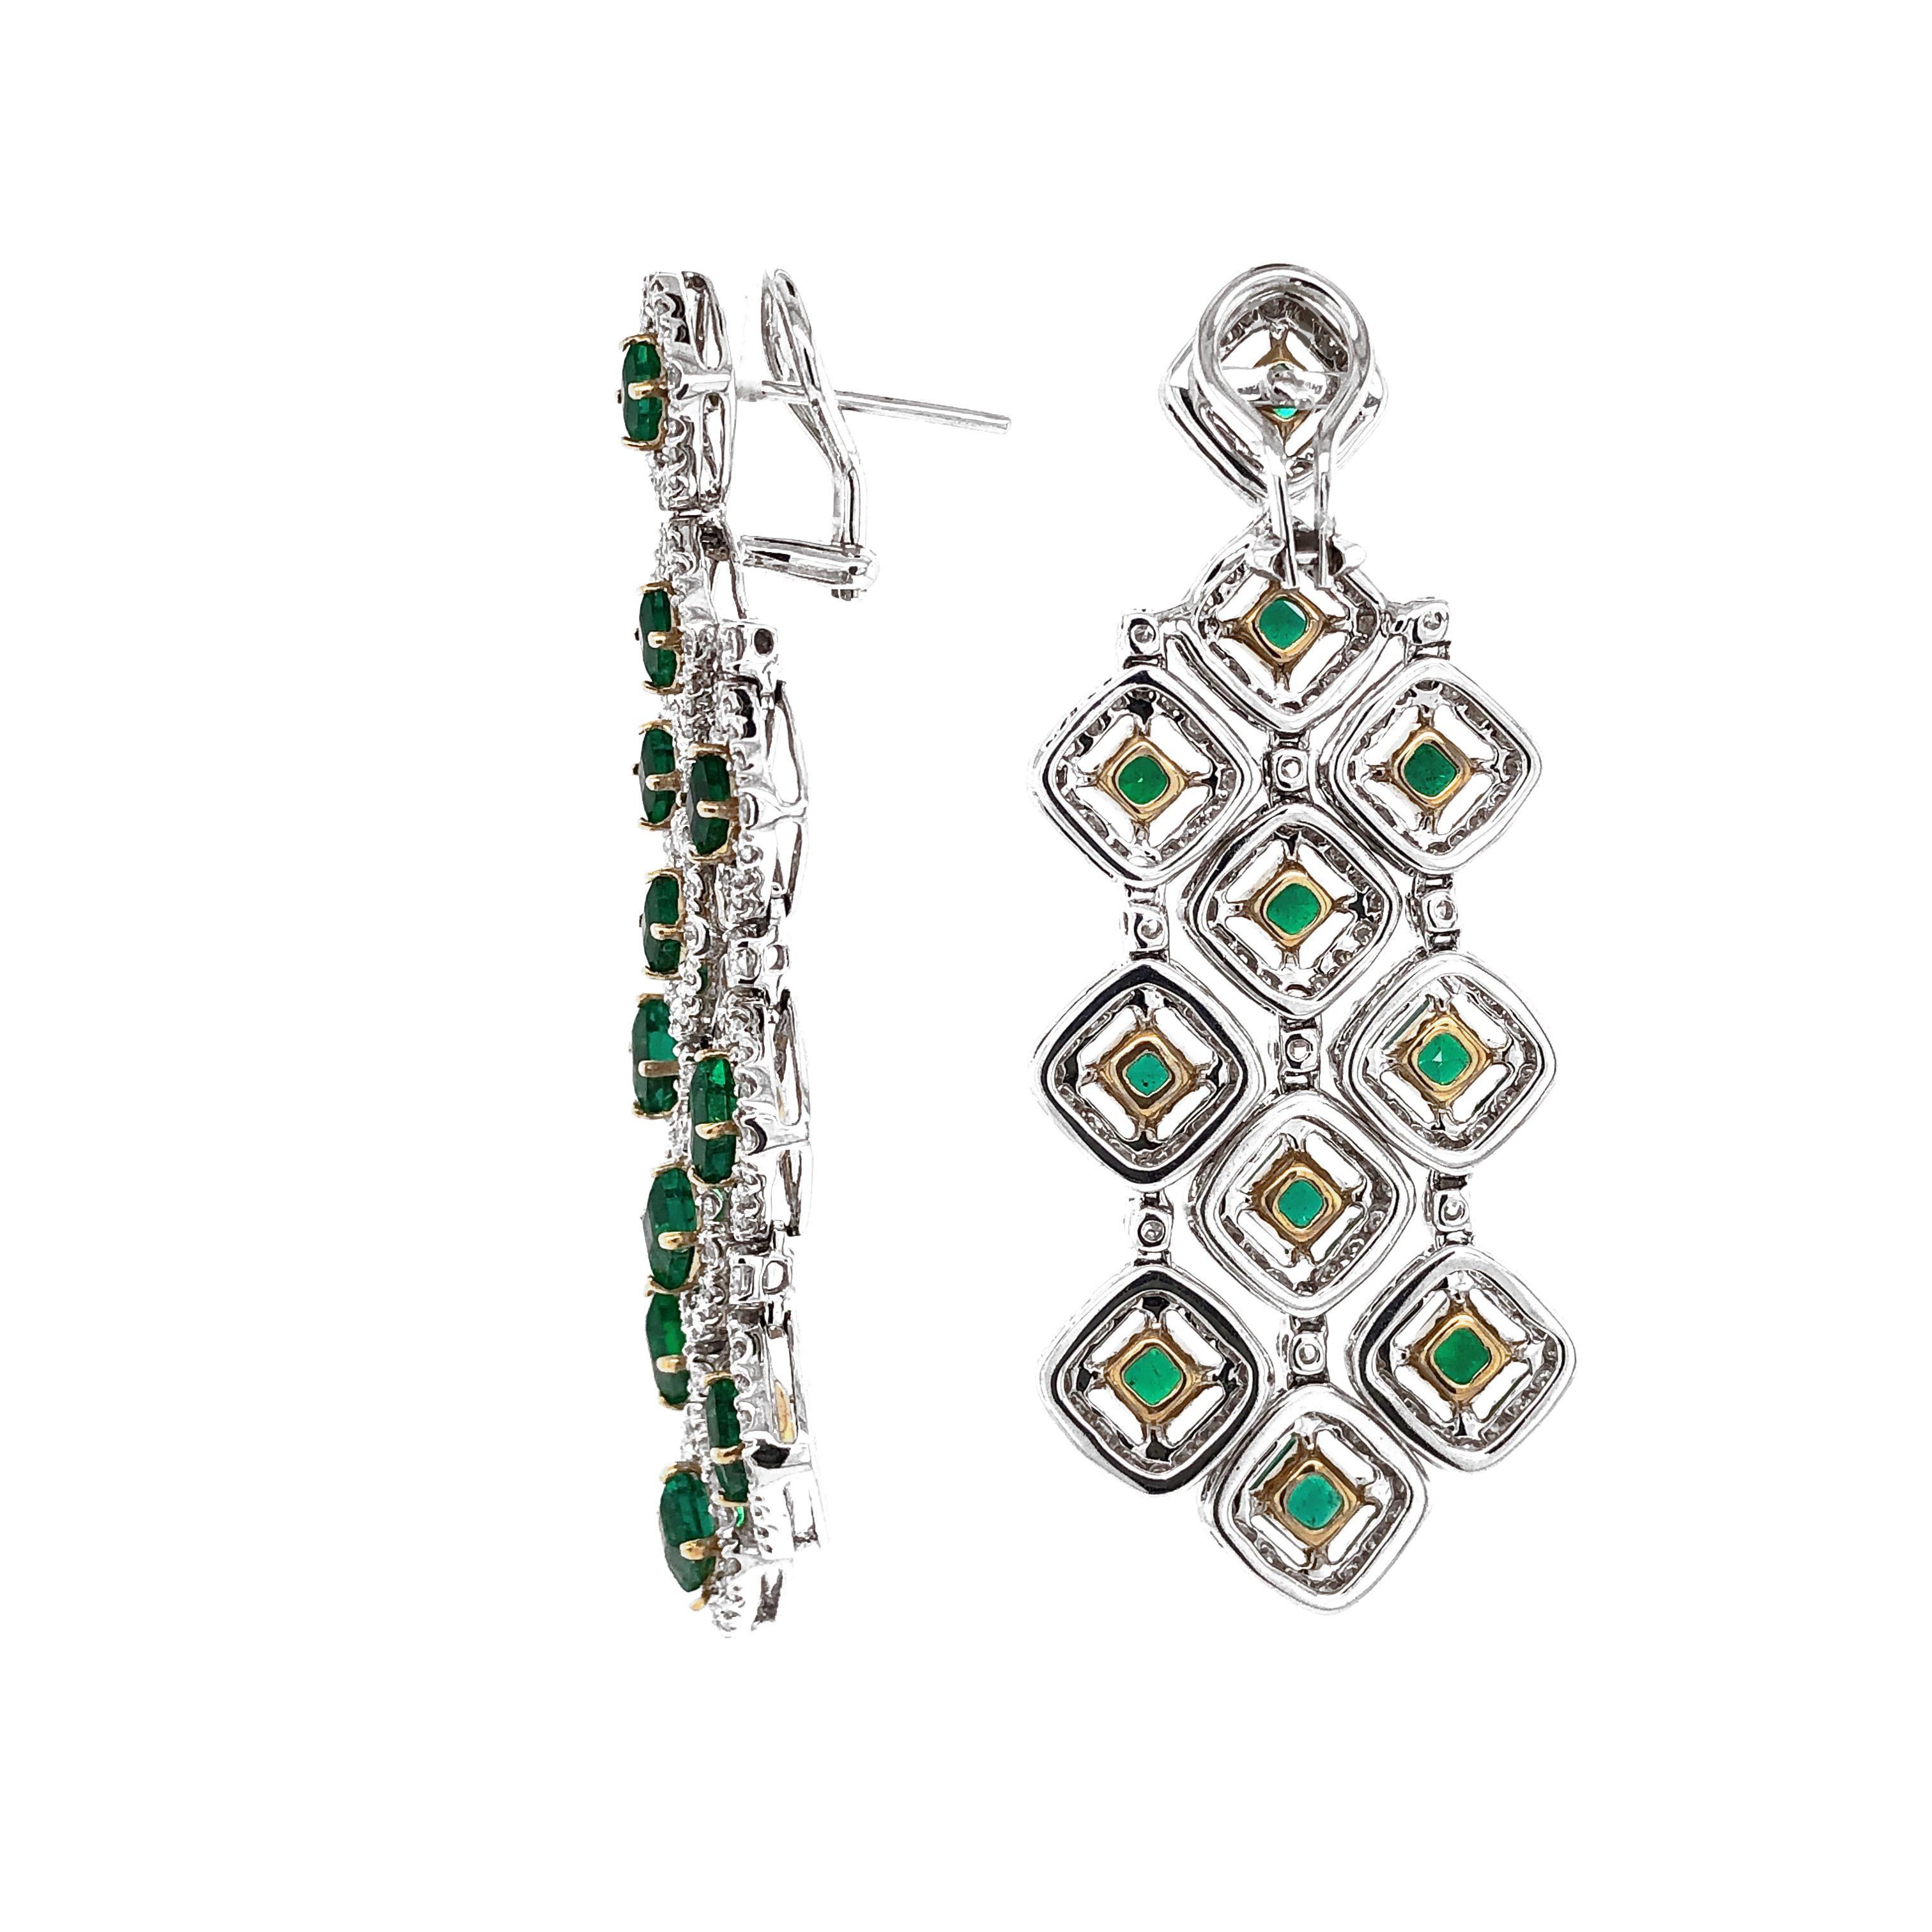 Contemporary Zambian Square Cut Emeralds 7.11 Carat Chandelier 18k Gold Earrings For Sale